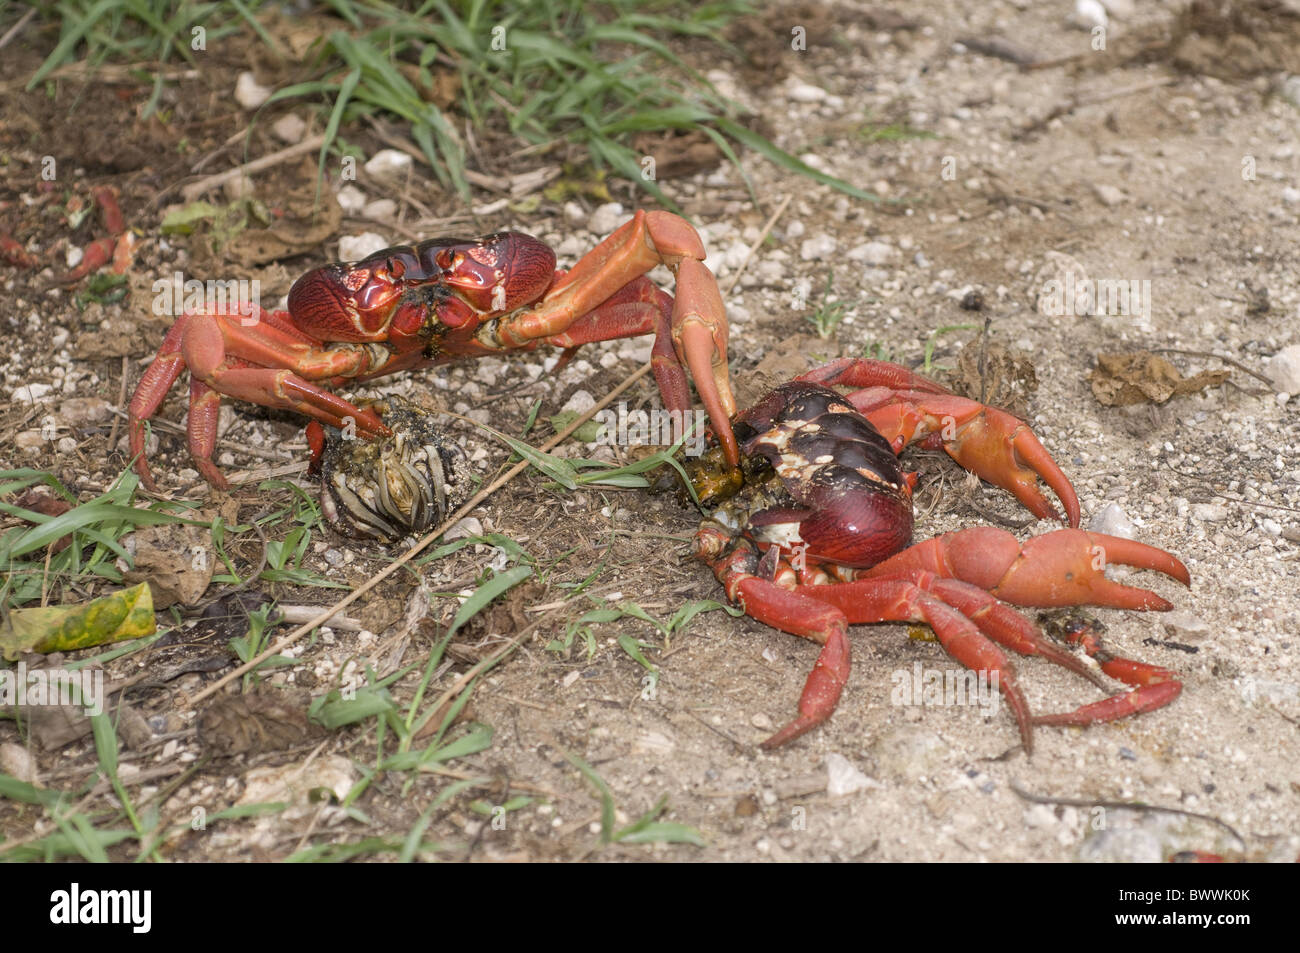 Red Crab Crustacean Cannibal Claws Gecarcoidea natalis Christmas Island Australia animal animals crab crabs crustacean Stock Photo